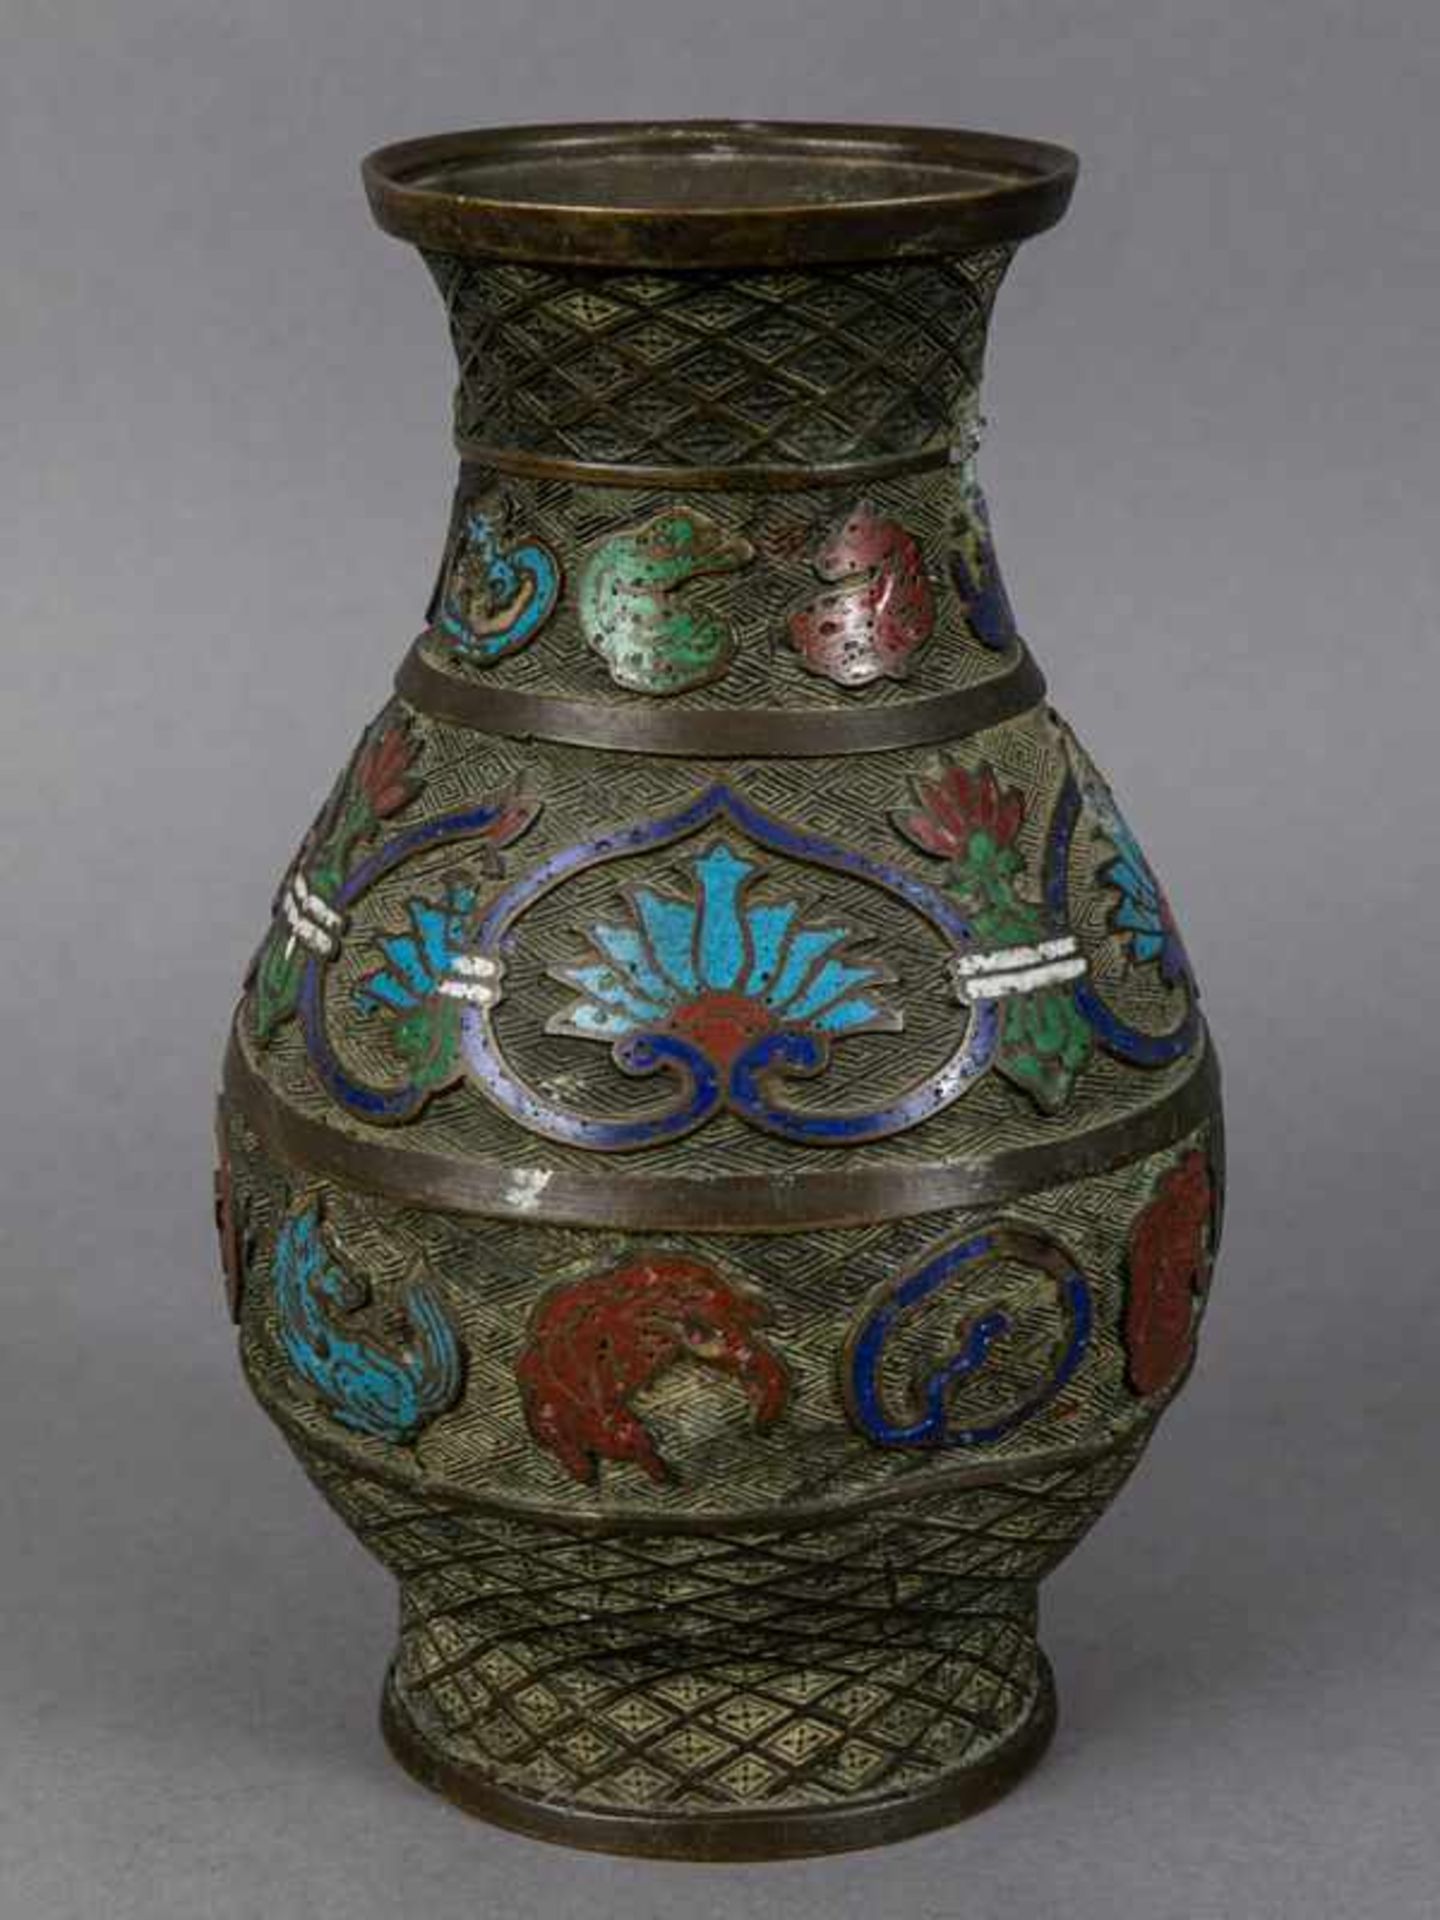 Vase mit Emaille-Cloisonné-Dekor, China, wohl 19. Jh. Vase mit Emaille-Cloisonné-Dekor, China, wohl